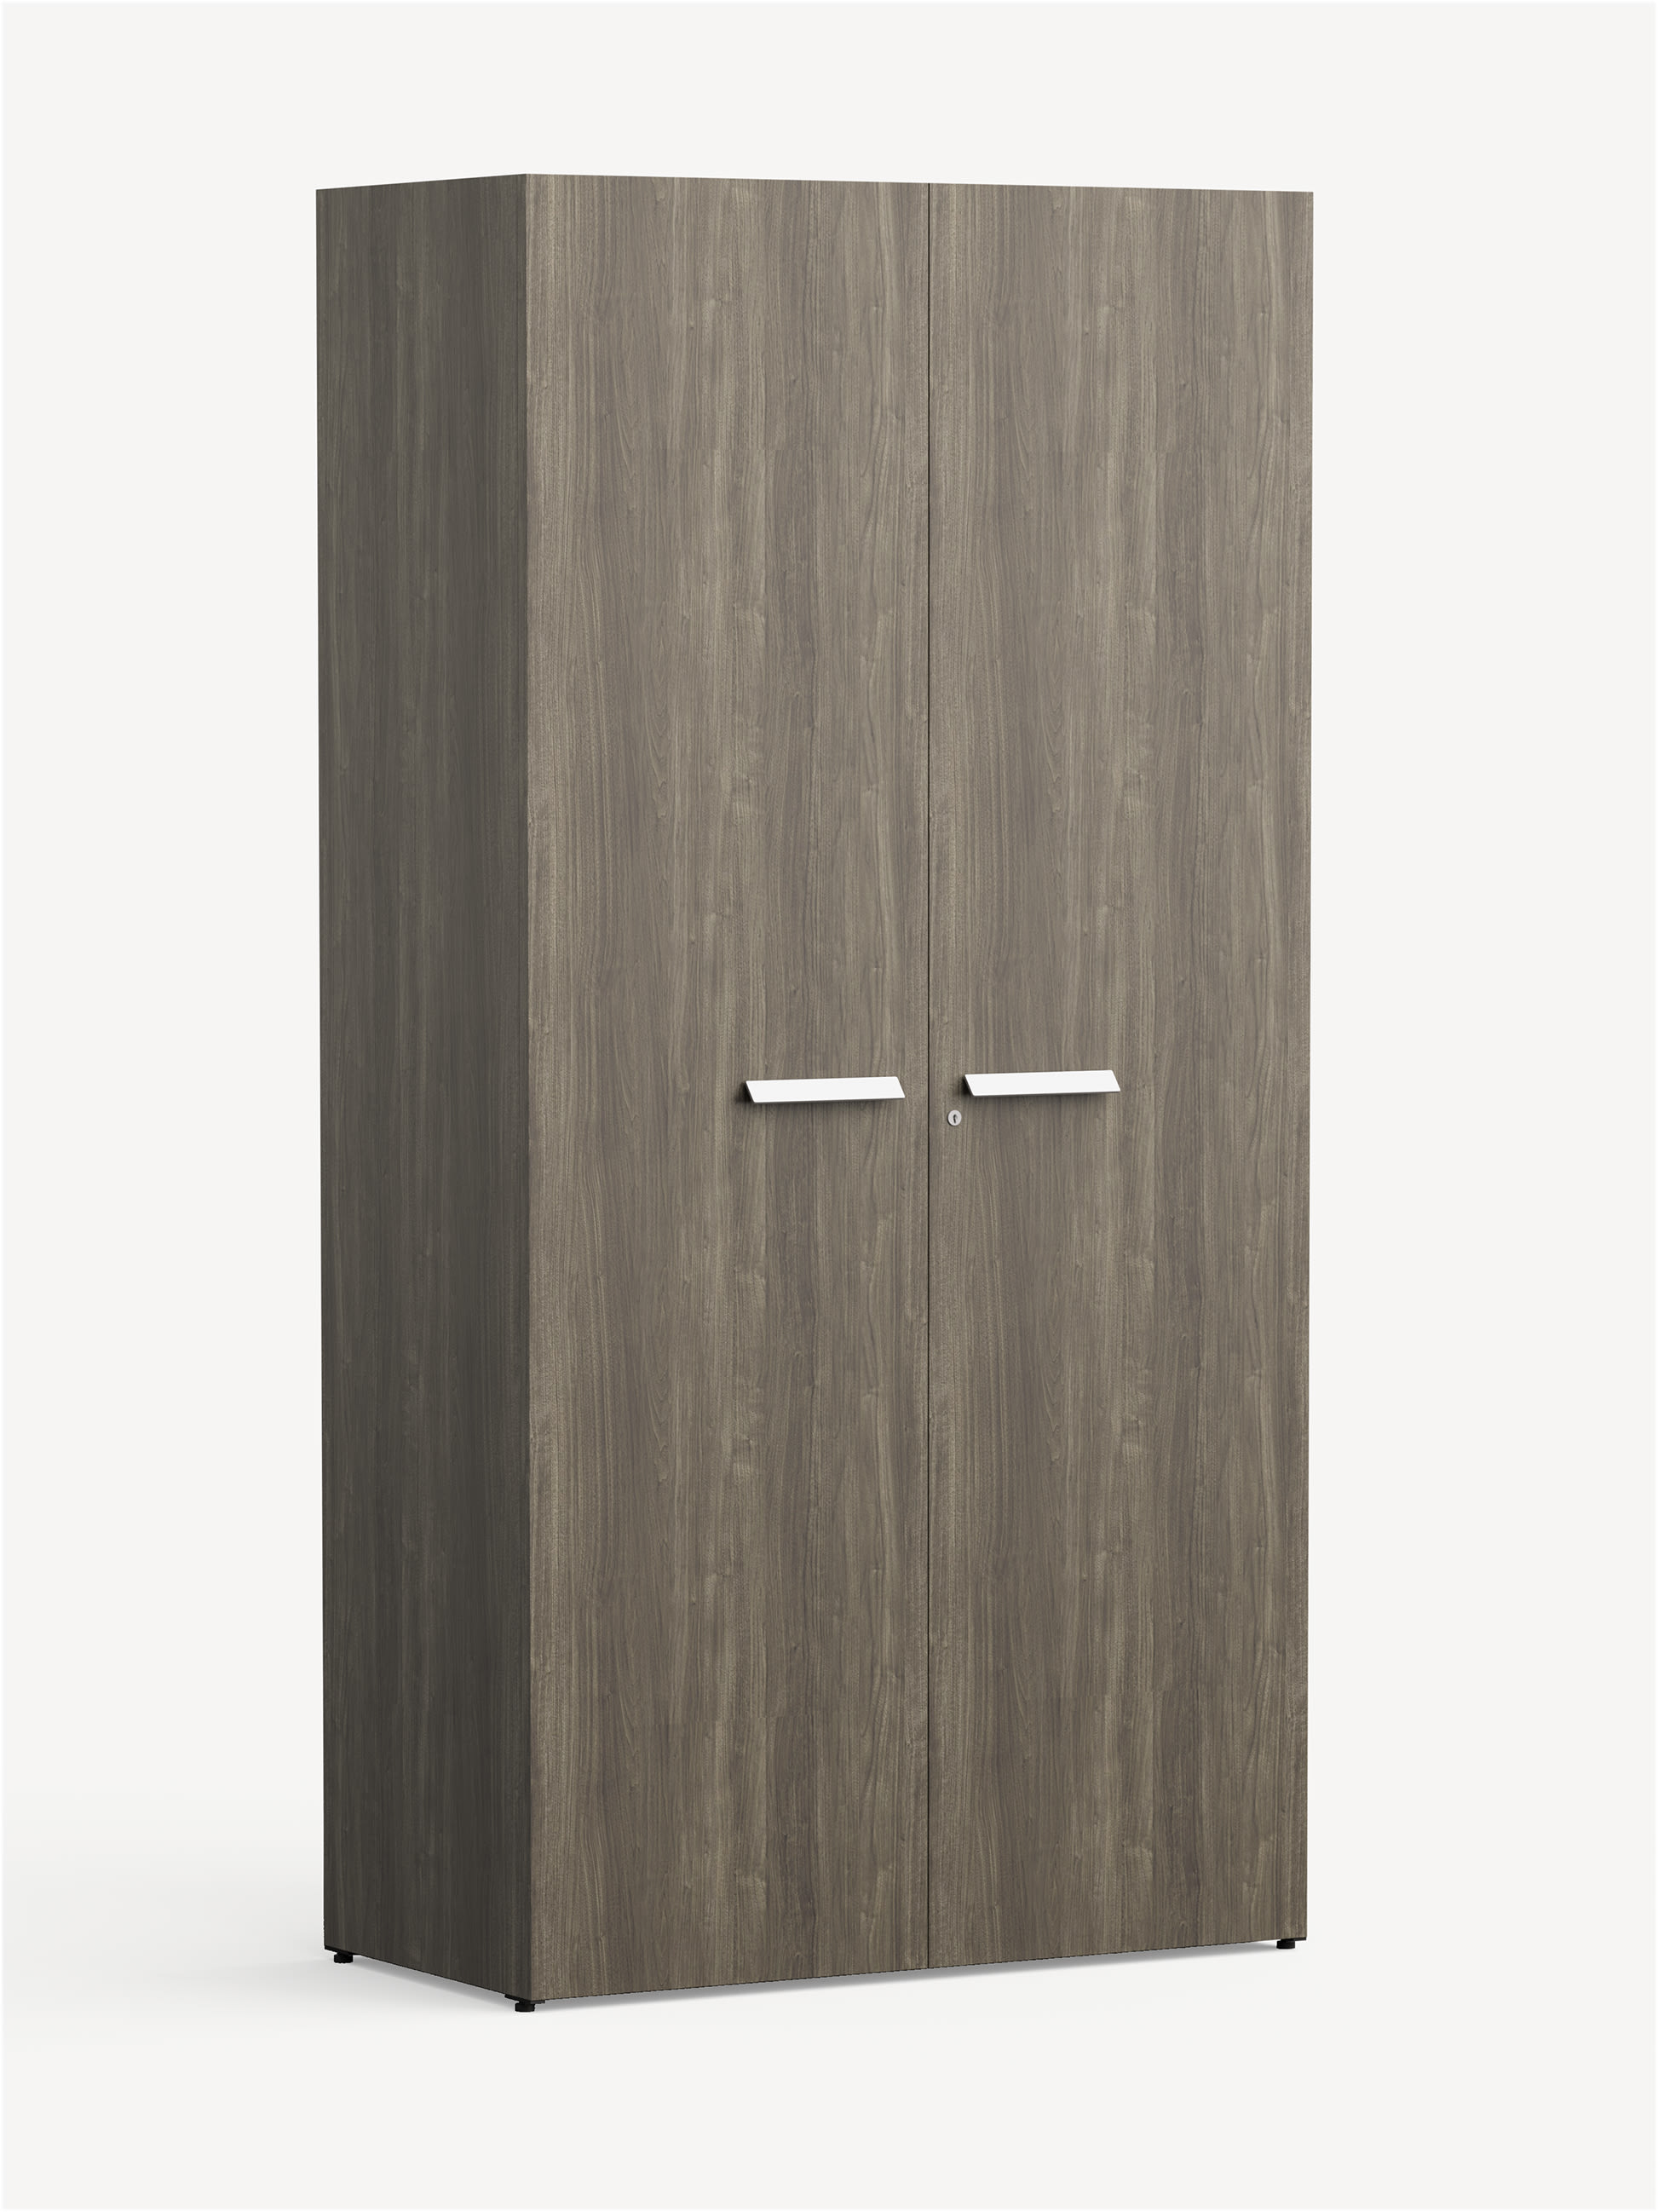 Approach 2-door Tower Wardrobe in a dark greyish brown with silver handles.